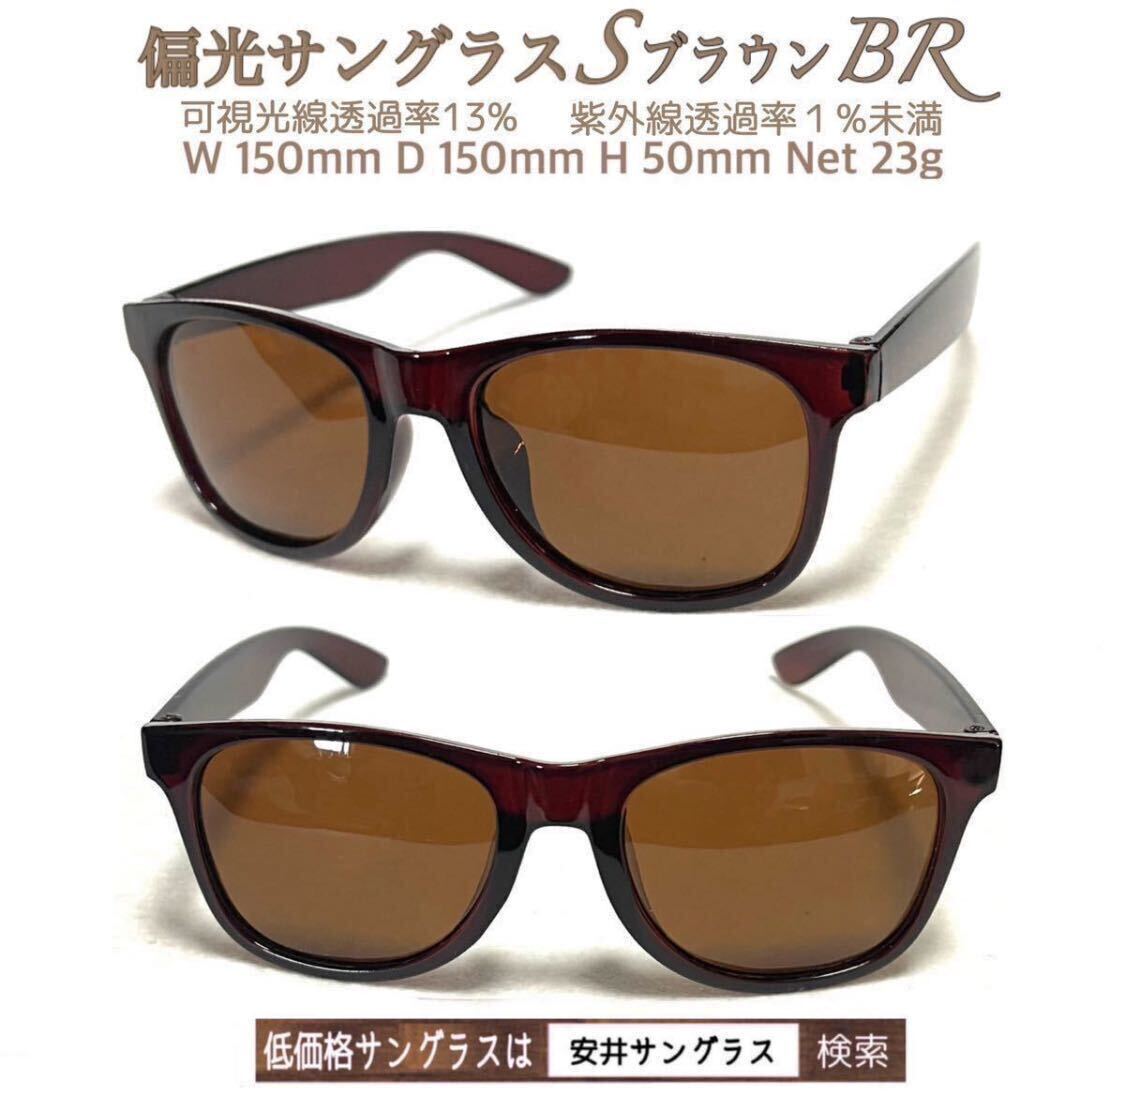 2 pcs set polarized light sunglasses R black Brown each 1 pcs cheap . sunglasses goggle ru